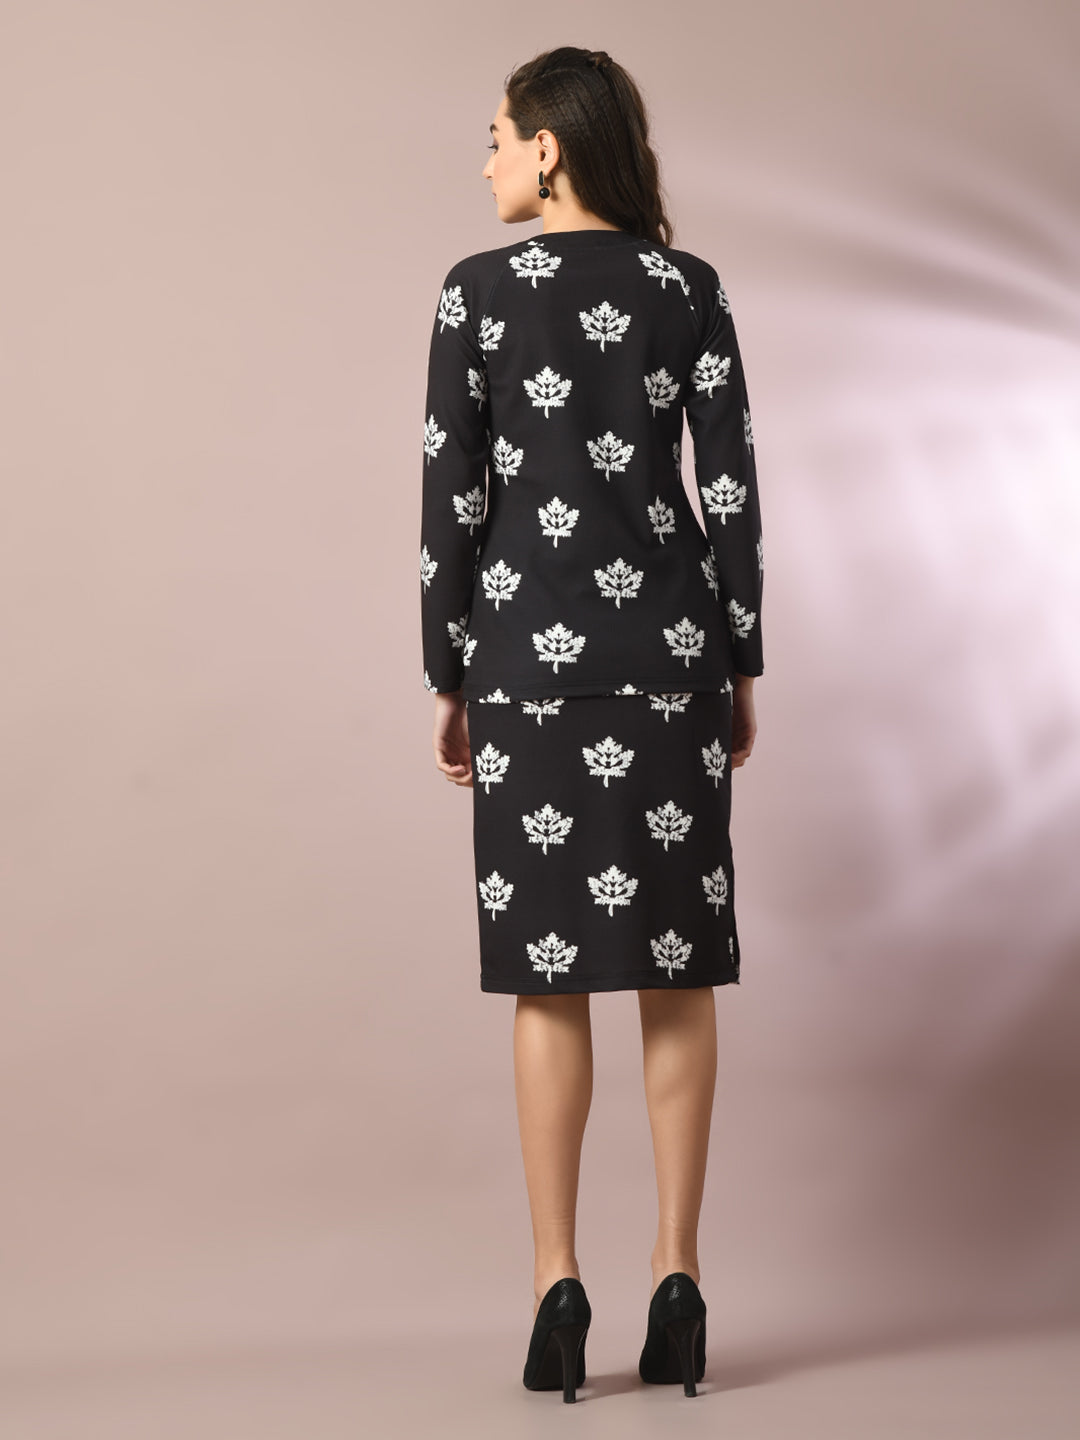 Women's  Black Printed Knee Length Party Embellished Skirts   - Myshka